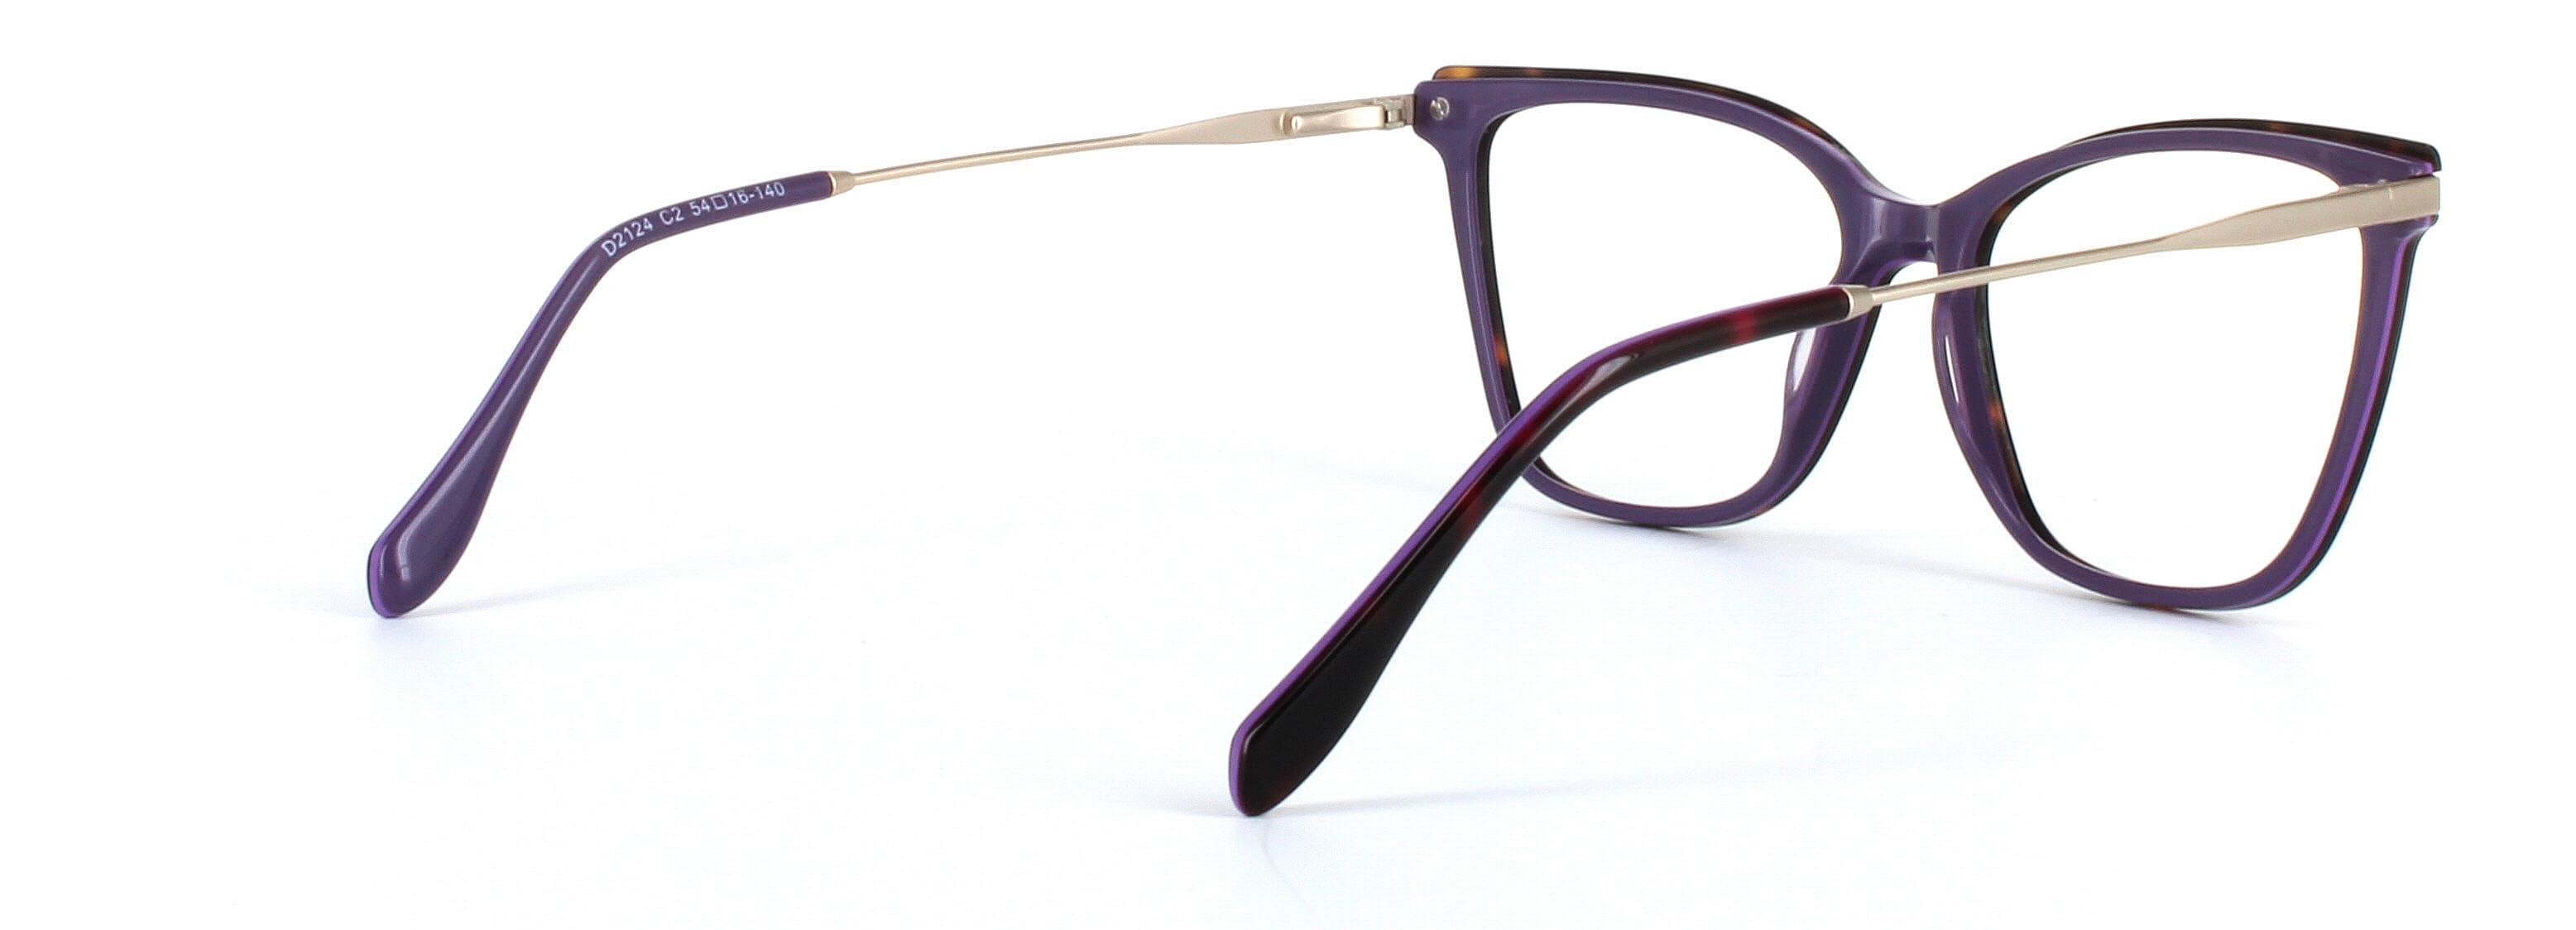 Harleigh Tortoise Full Rim Square Acetate Glasses - Image View 4